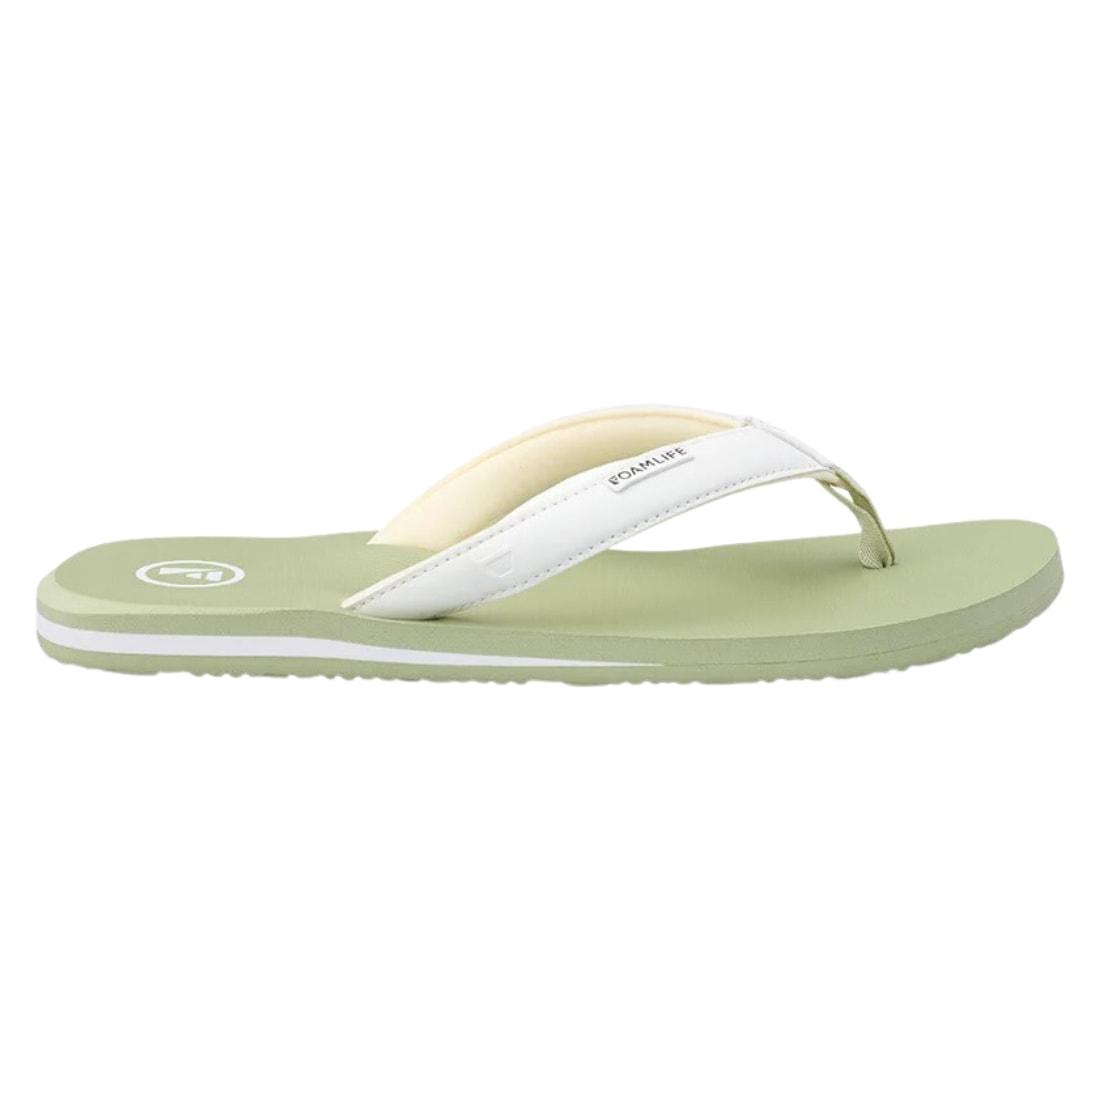 Foamlife Womens Lixi SC Flip Flop Sandals - Sage Green - Womens Flip Flops by FoamLife